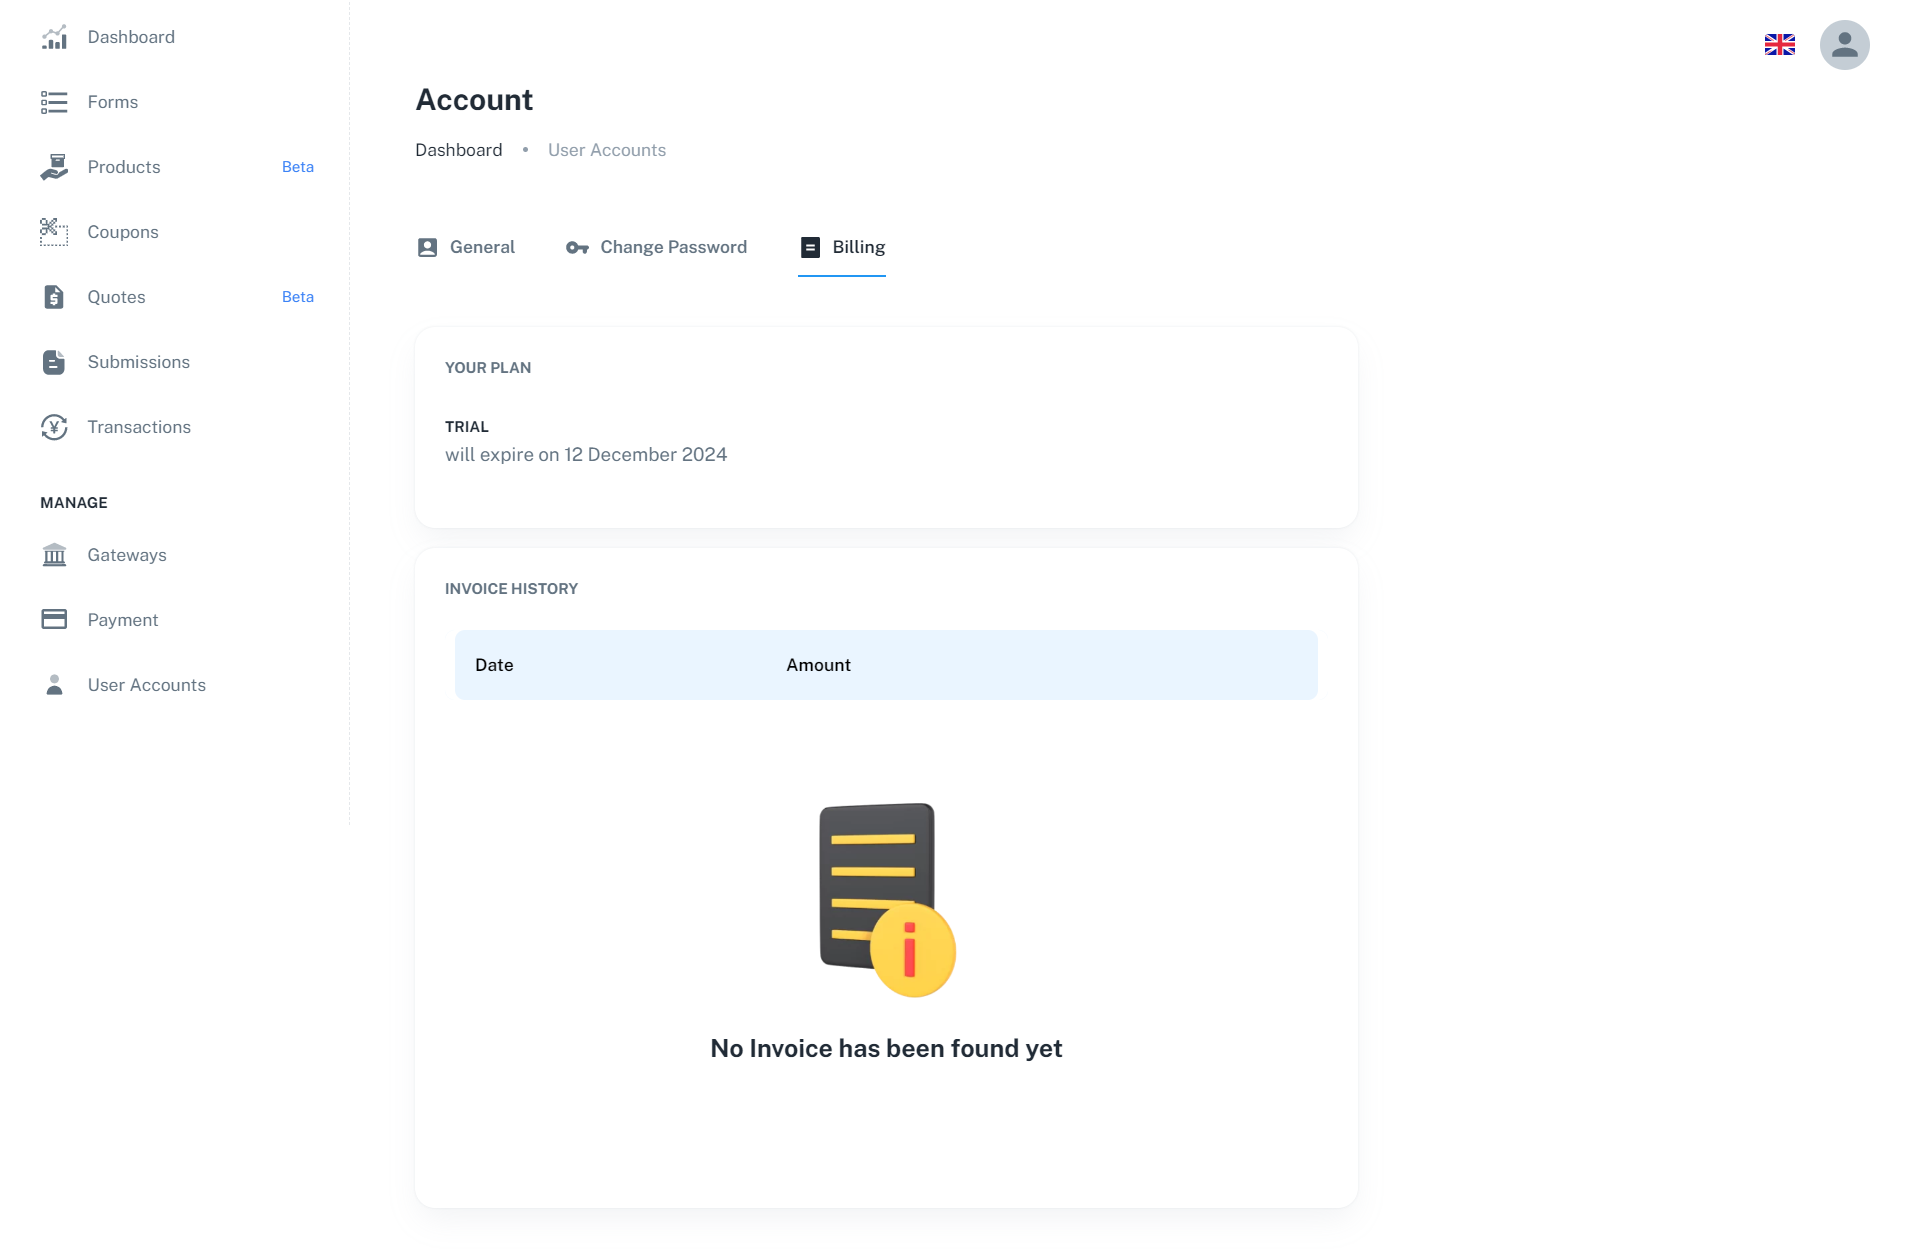 User Accounts FormPay